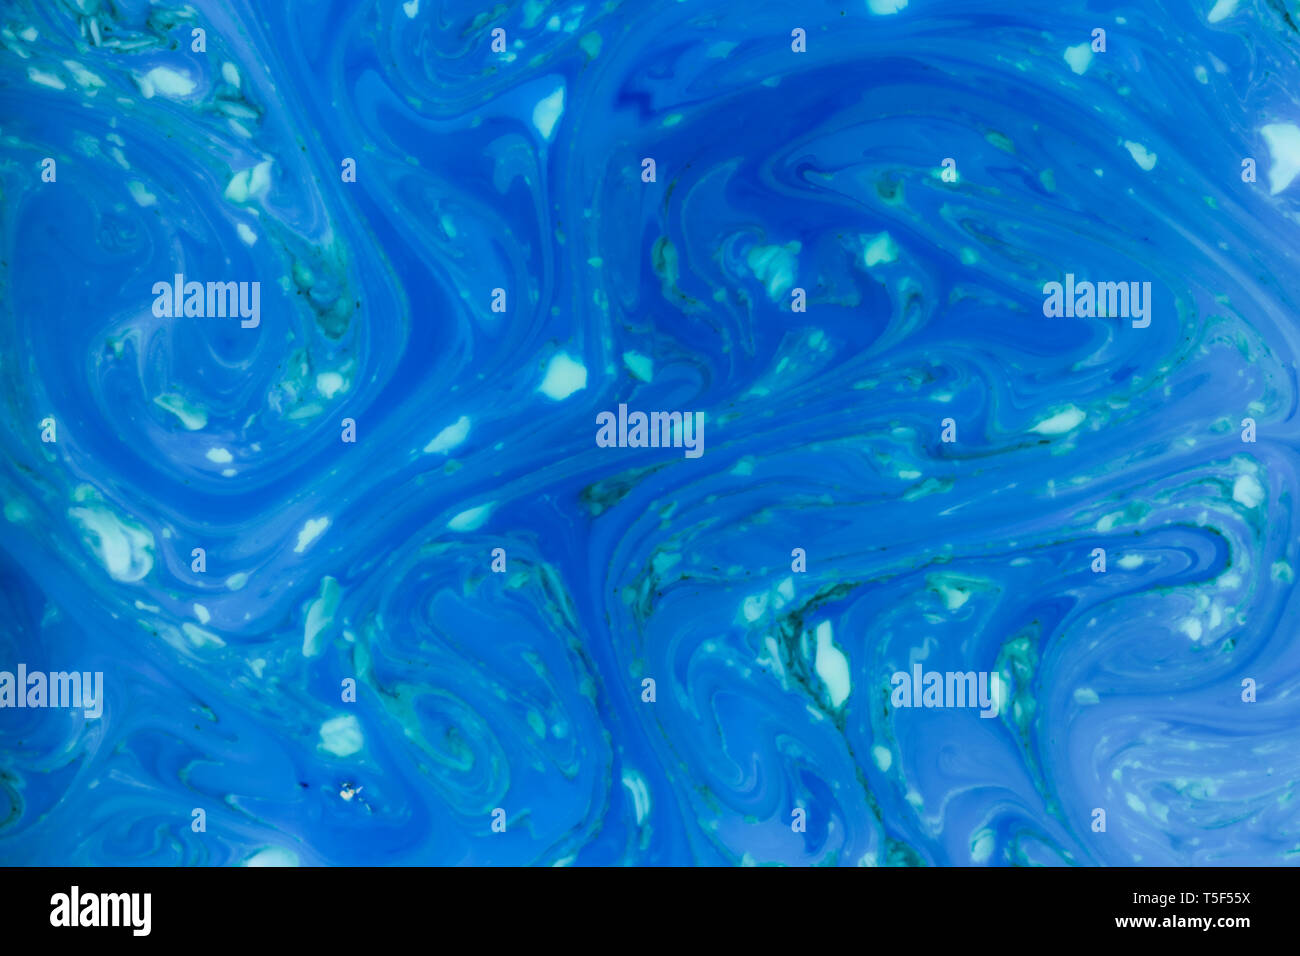 Blue marble texture baxkground Stock Photo - Alamy